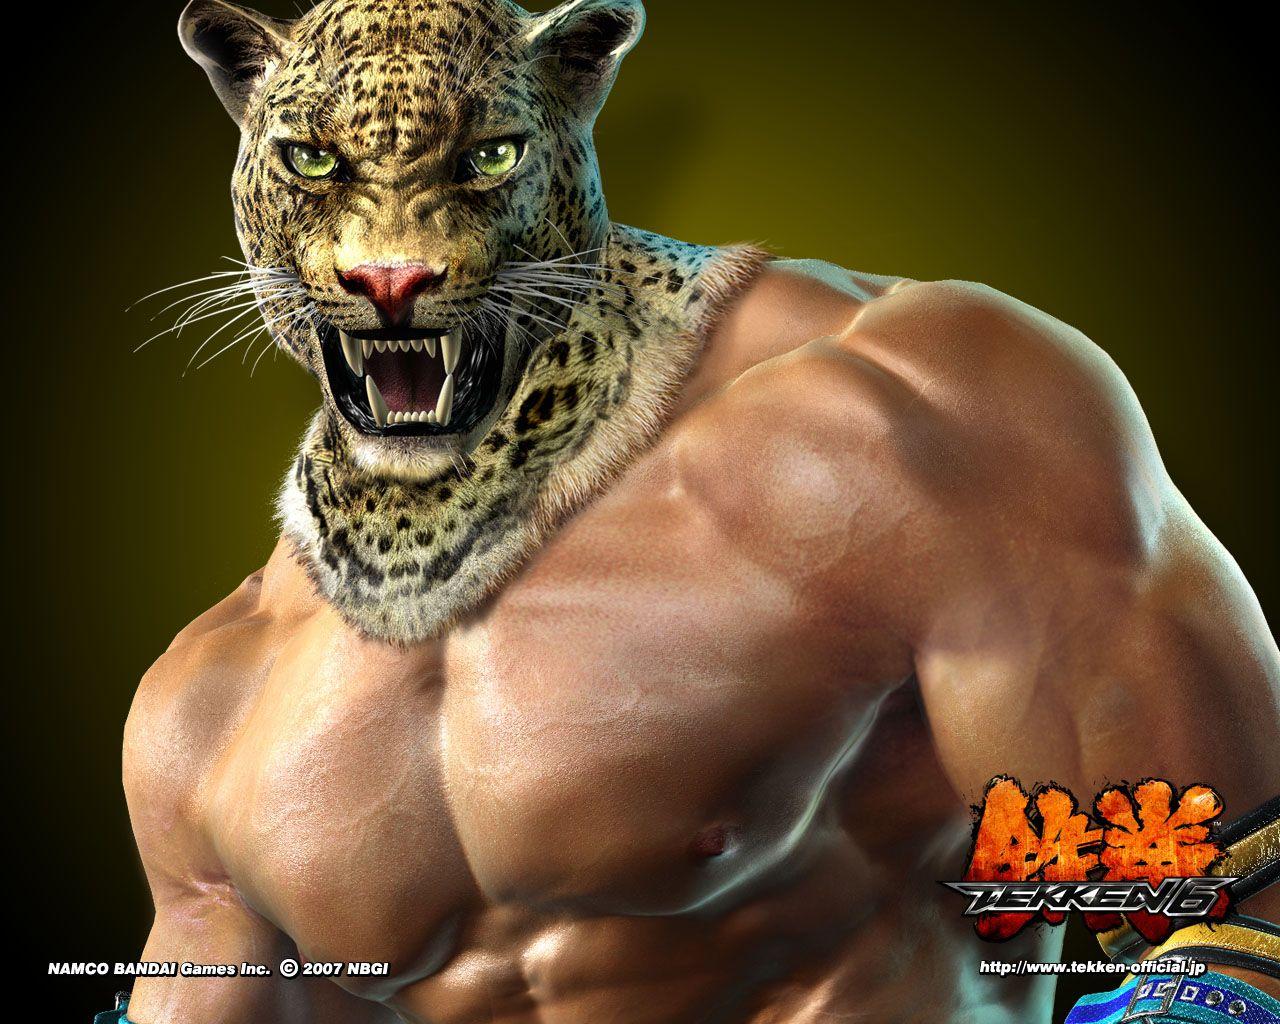 King From Tekken image King Wallpaper HD wallpaper and background